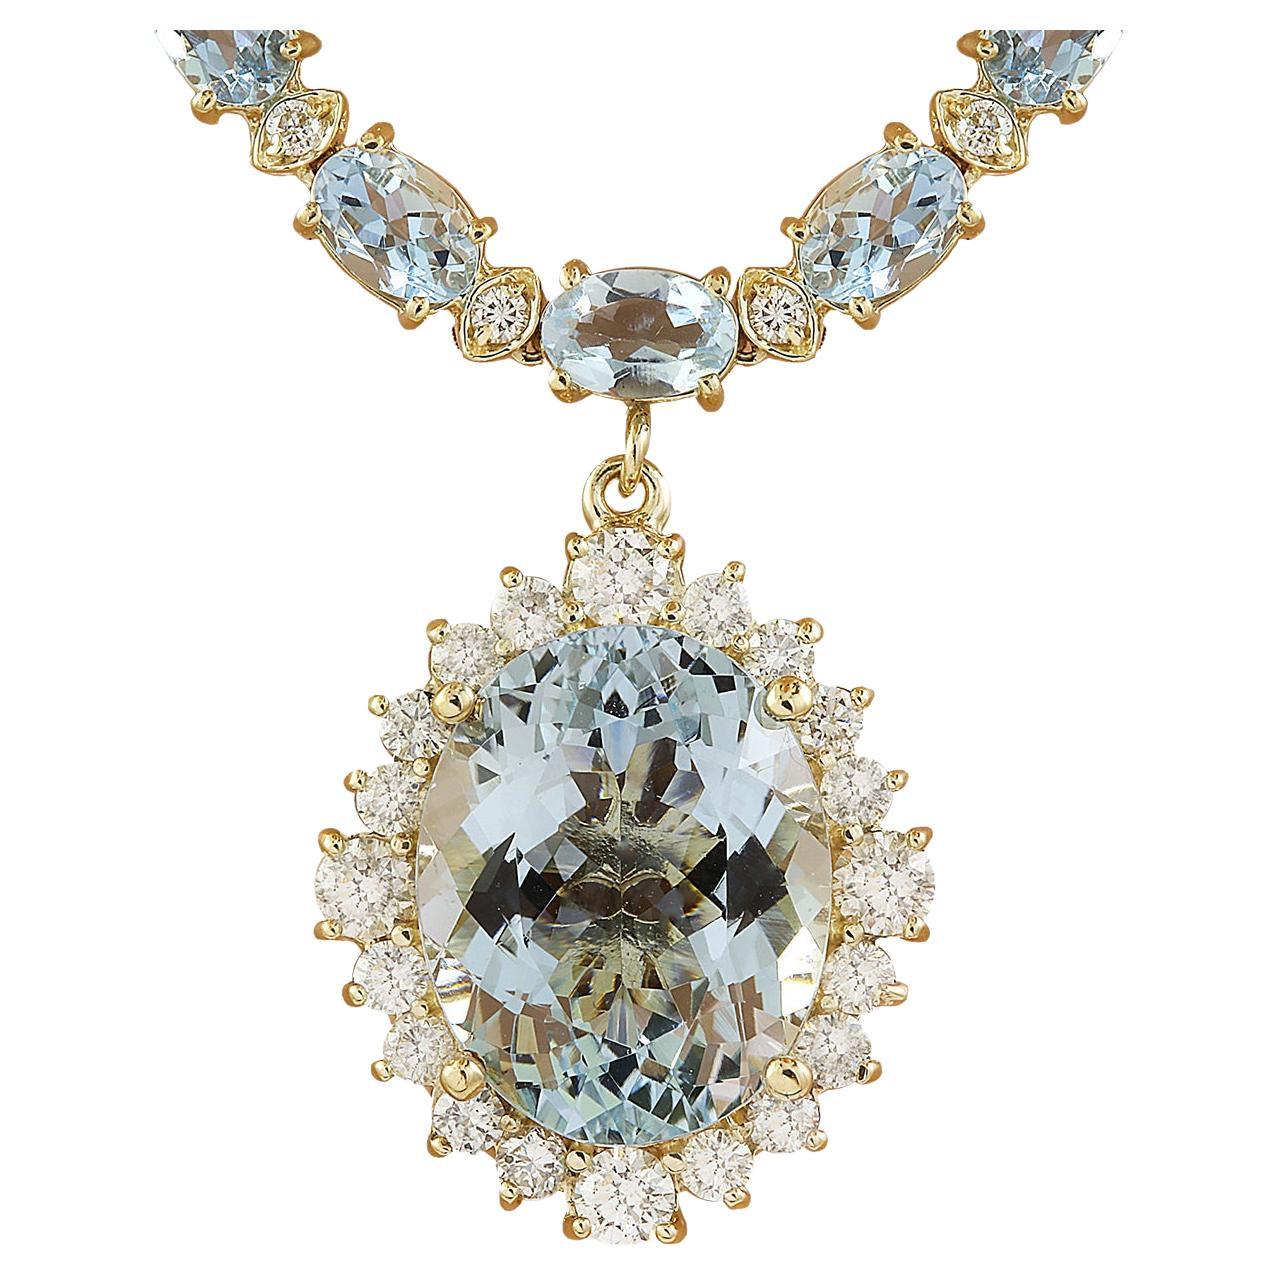 Natural Aquamarine Diamond Necklace in 14 Karat Solid Yellow Gold 